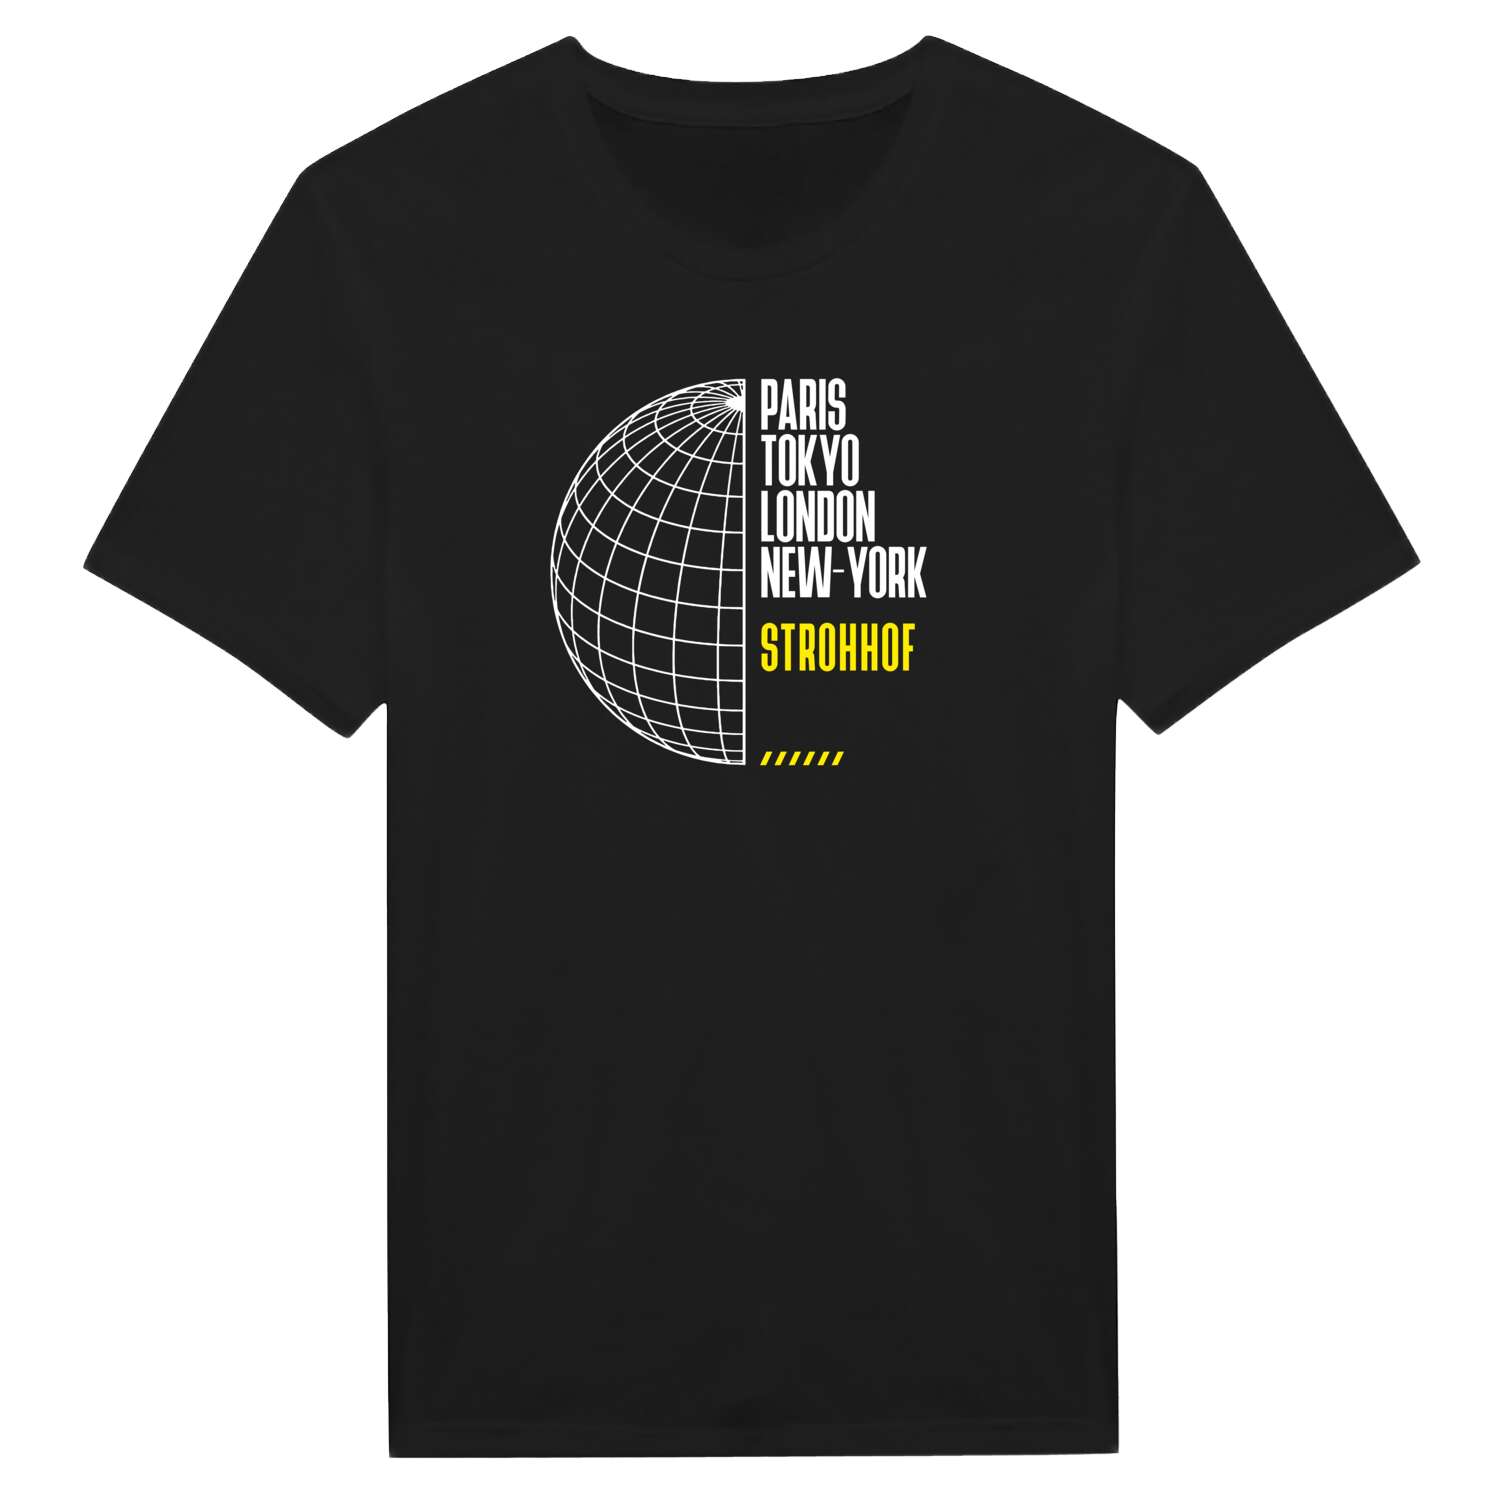 Strohhof T-Shirt »Paris Tokyo London«